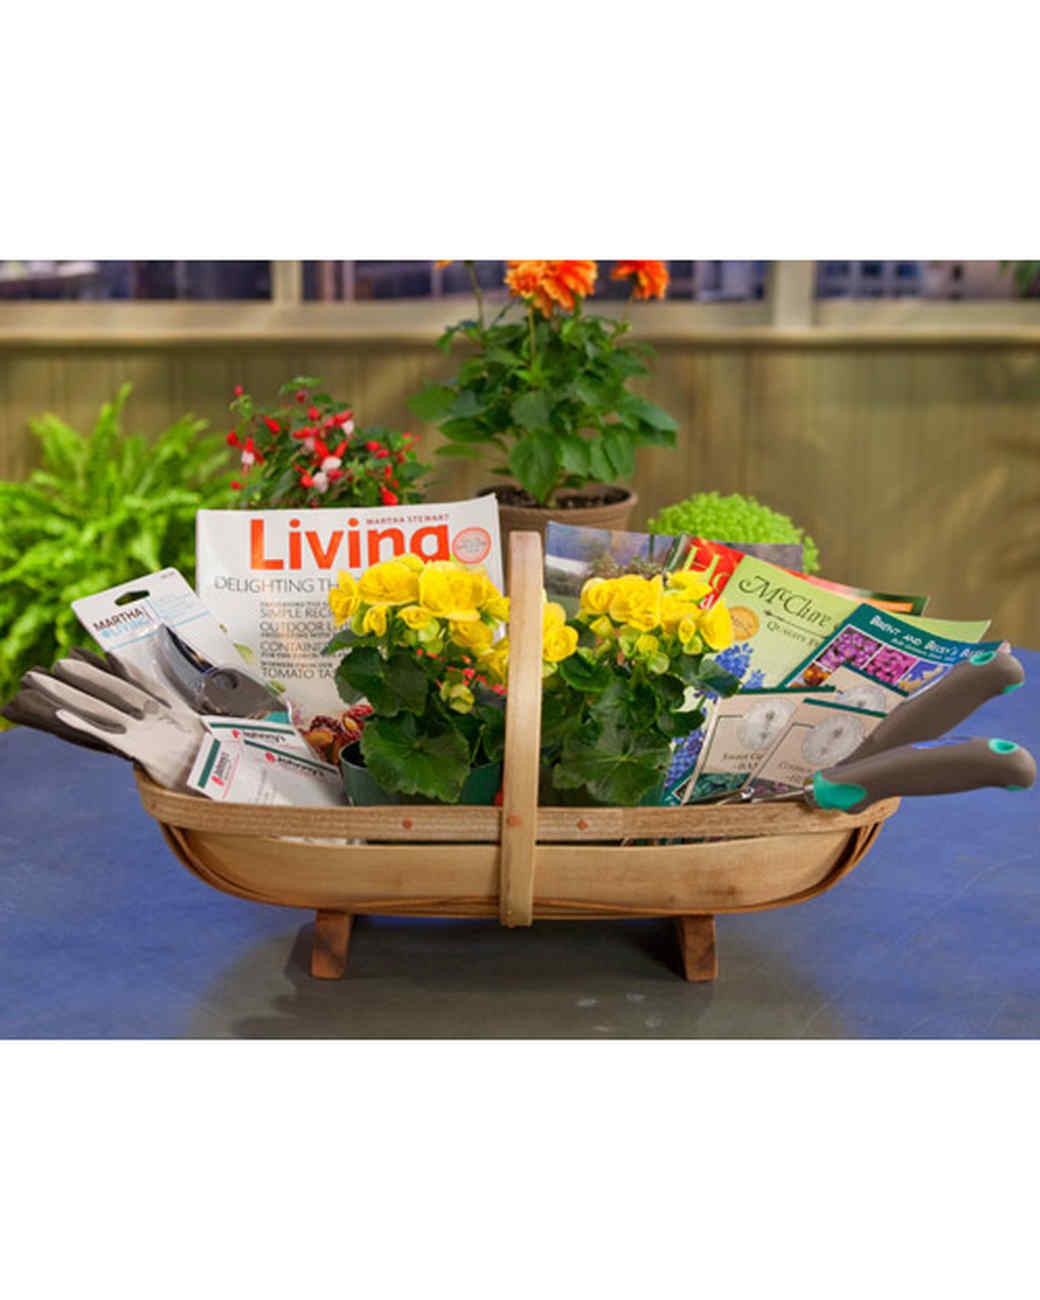 Best ideas about Garden Gift Baskets Ideas
. Save or Pin Gardening Gift Basket & Video Now.